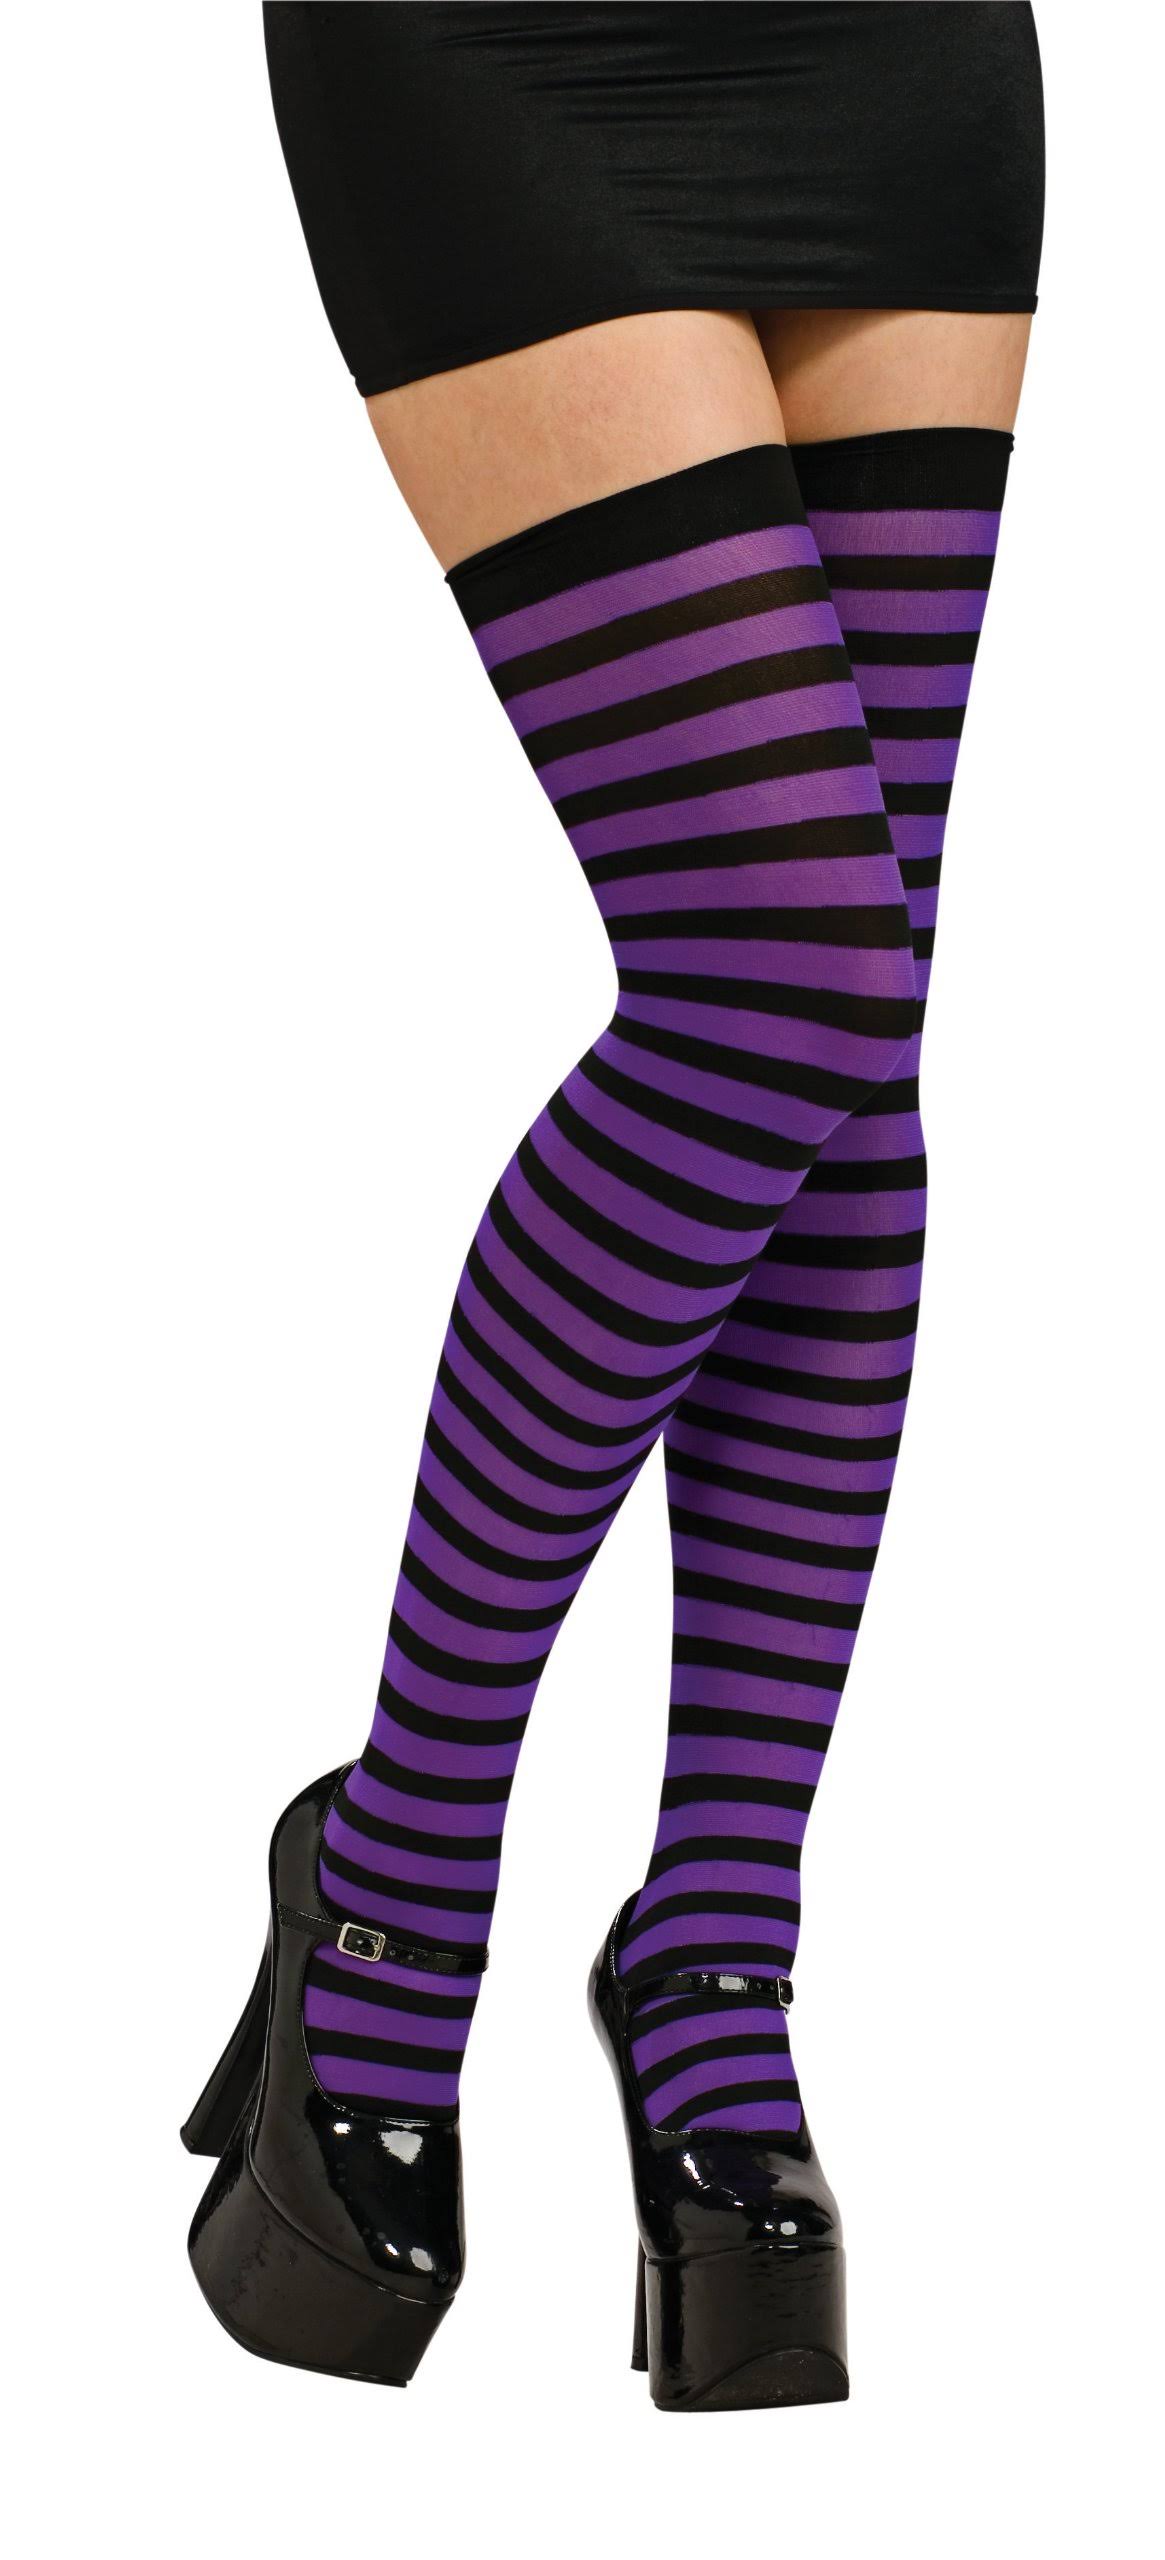 Rubie's Costume Co Striped Thigh High Costume - Black/Purple